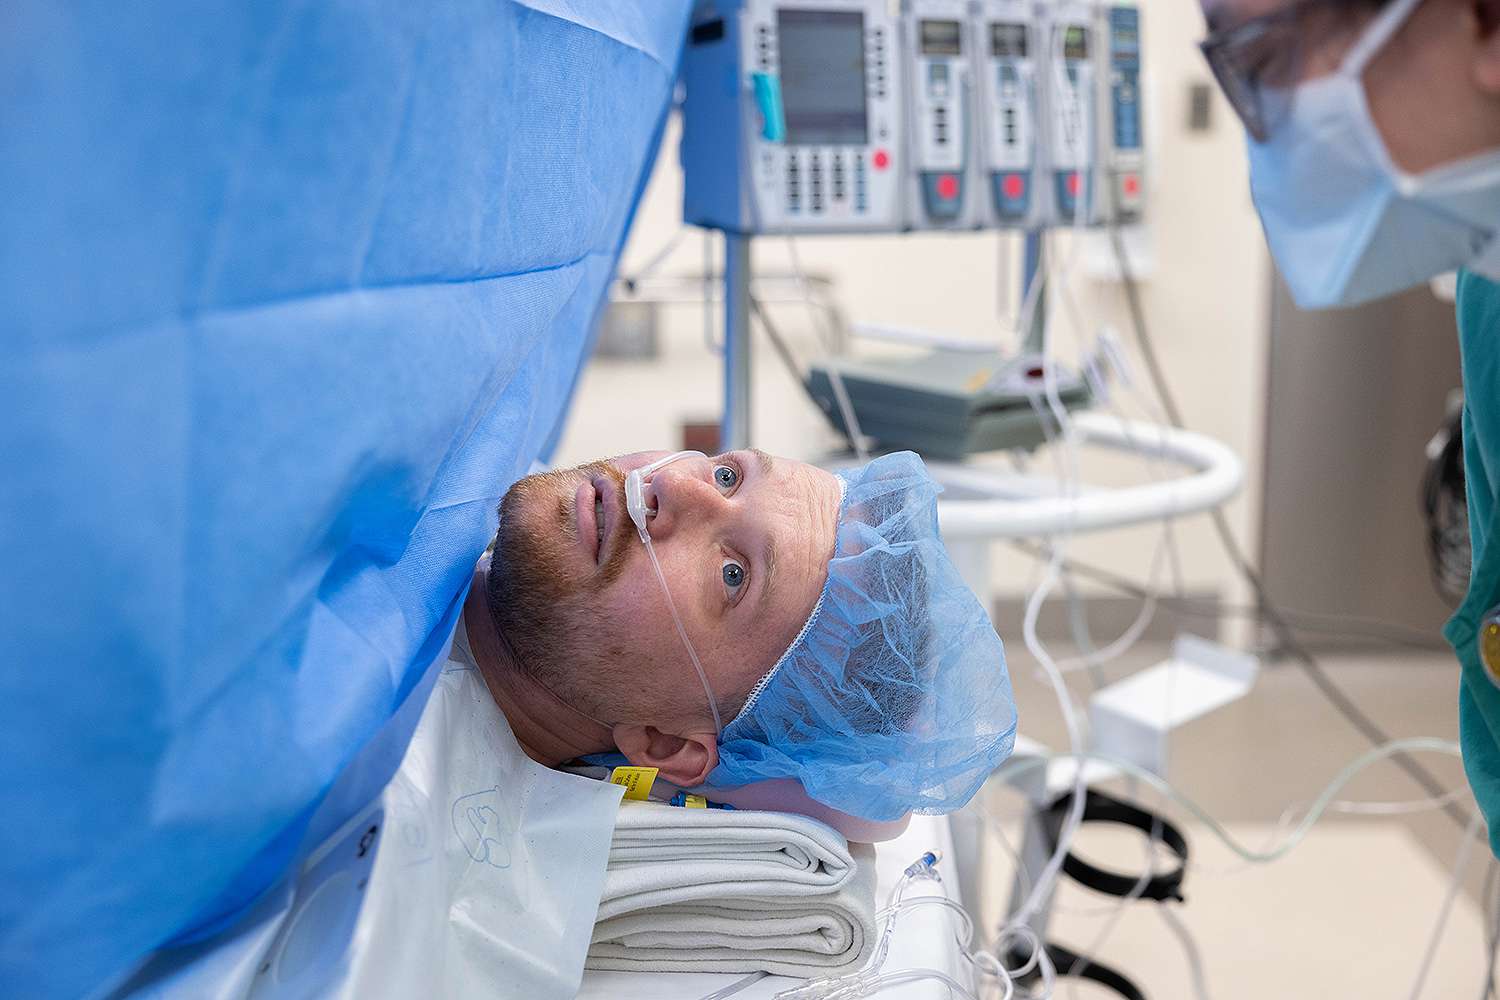 Chicago Man Undergoes Kidney Transplant While Awake [Video]